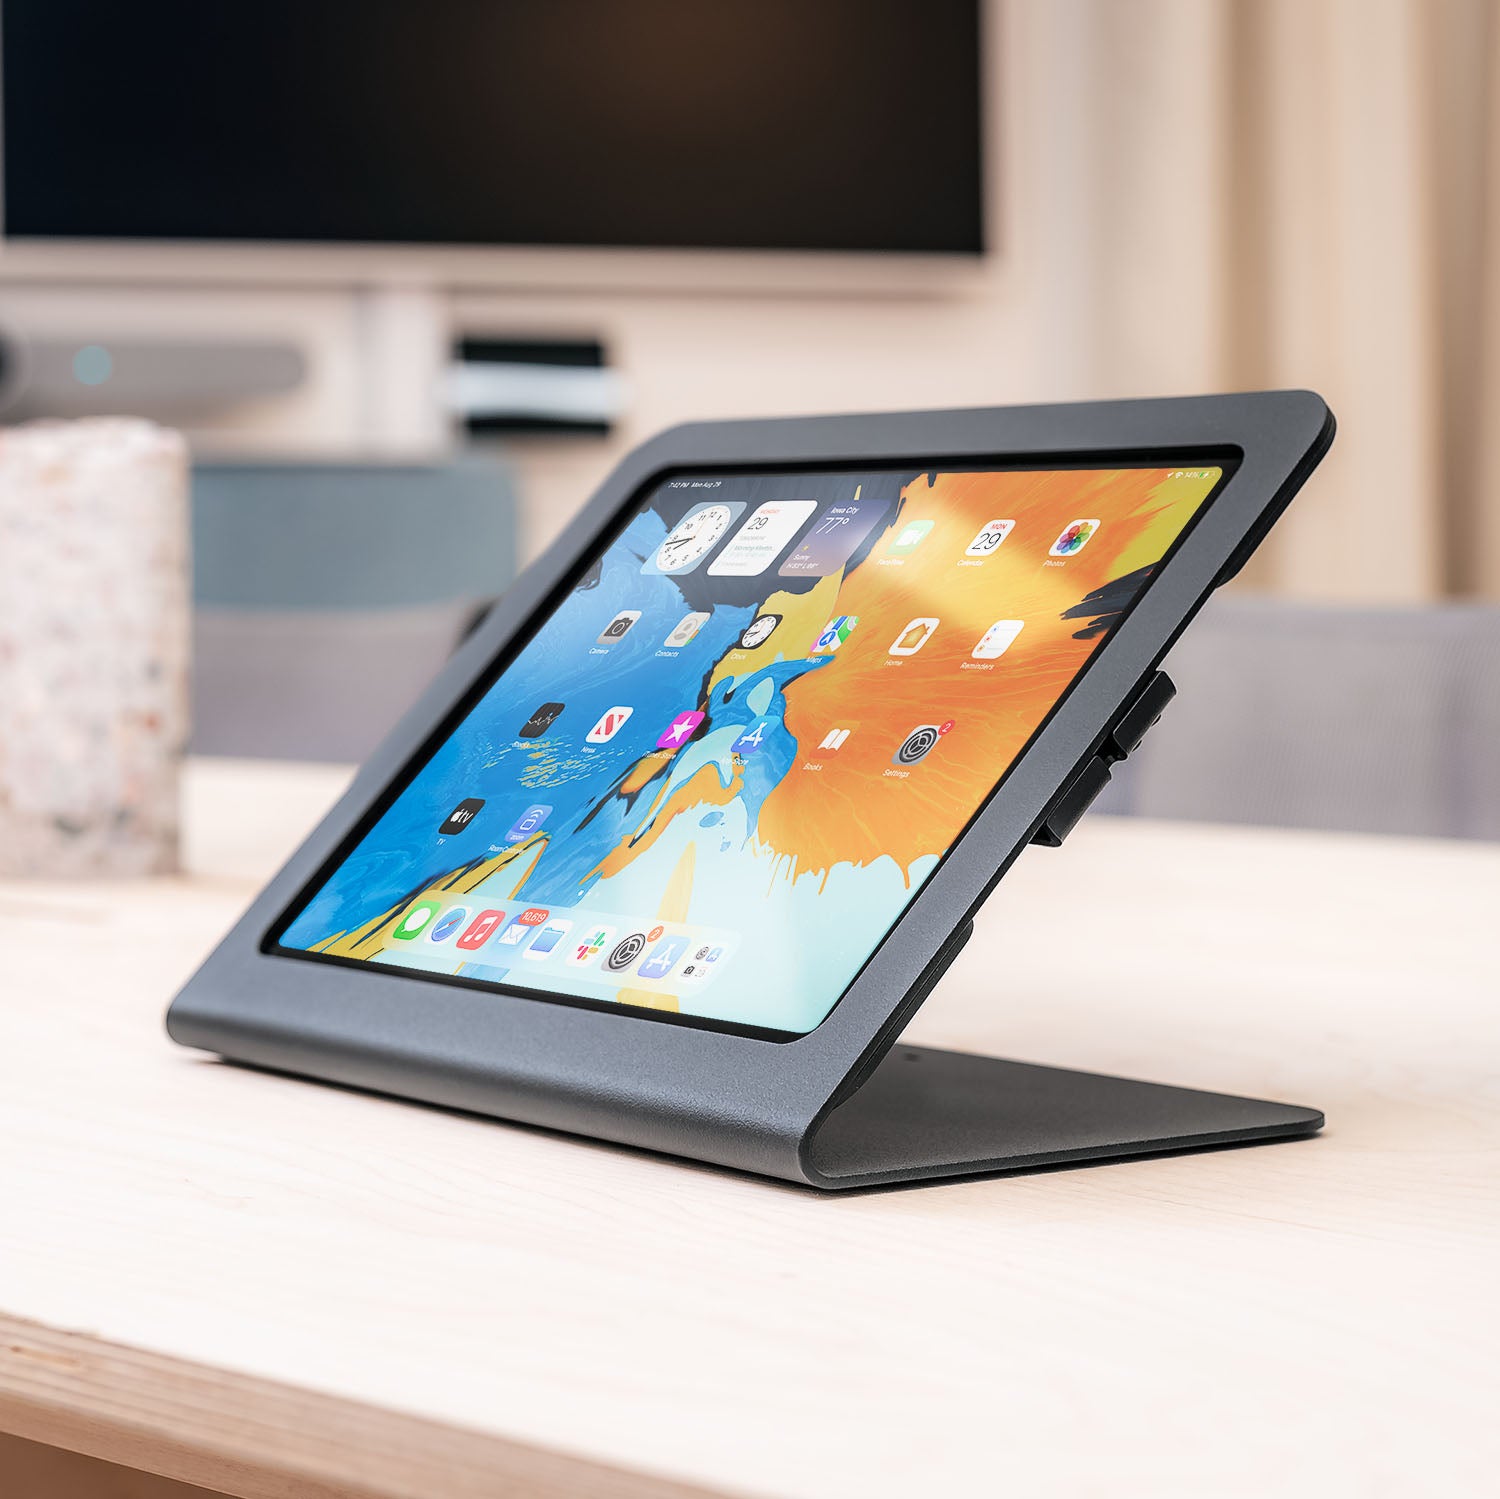 Apple iPad Pro 12.9-inch (5th gen): Features, Specs & Price